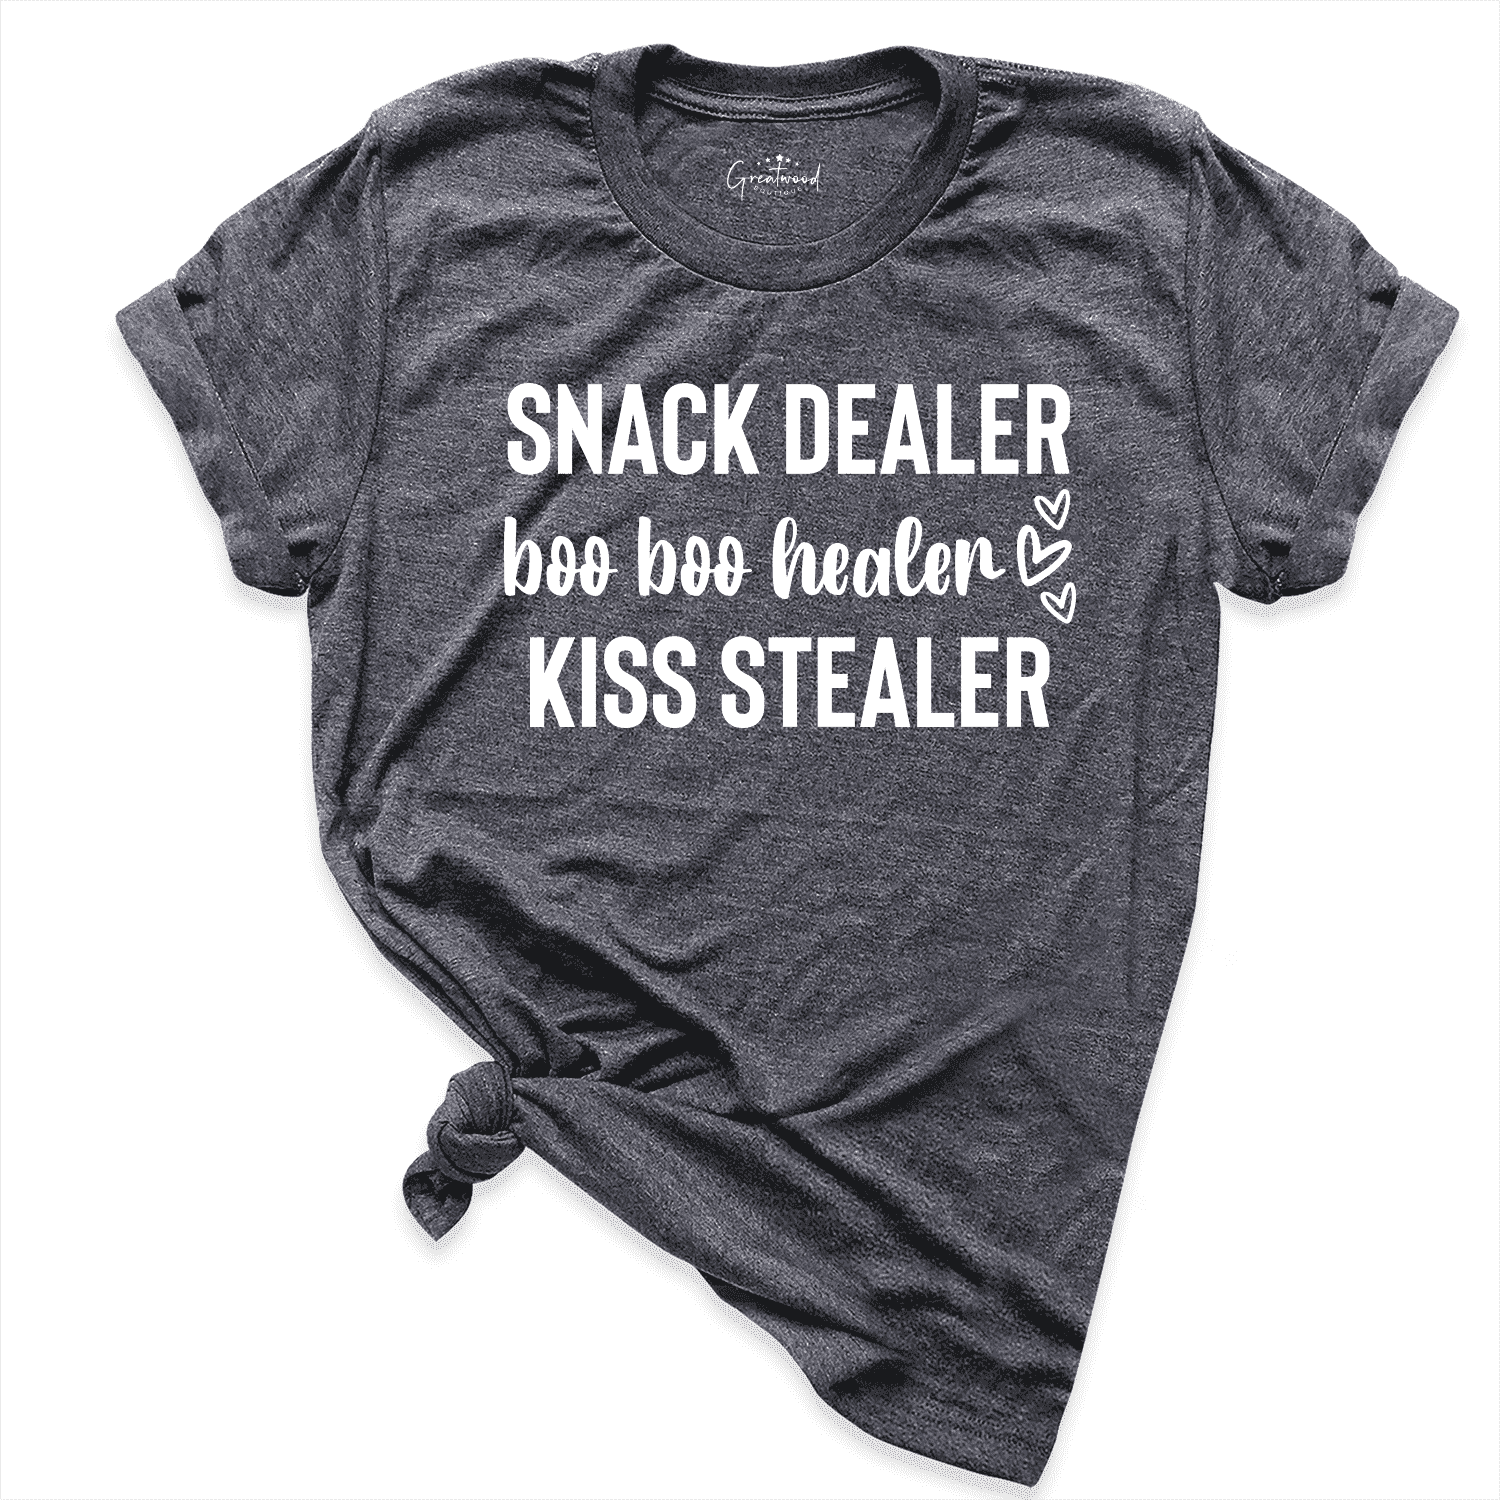 Snack Dealer BooBoo Healer Kiss Stealer Shirt D.Grey  - Greatwood  Boutique